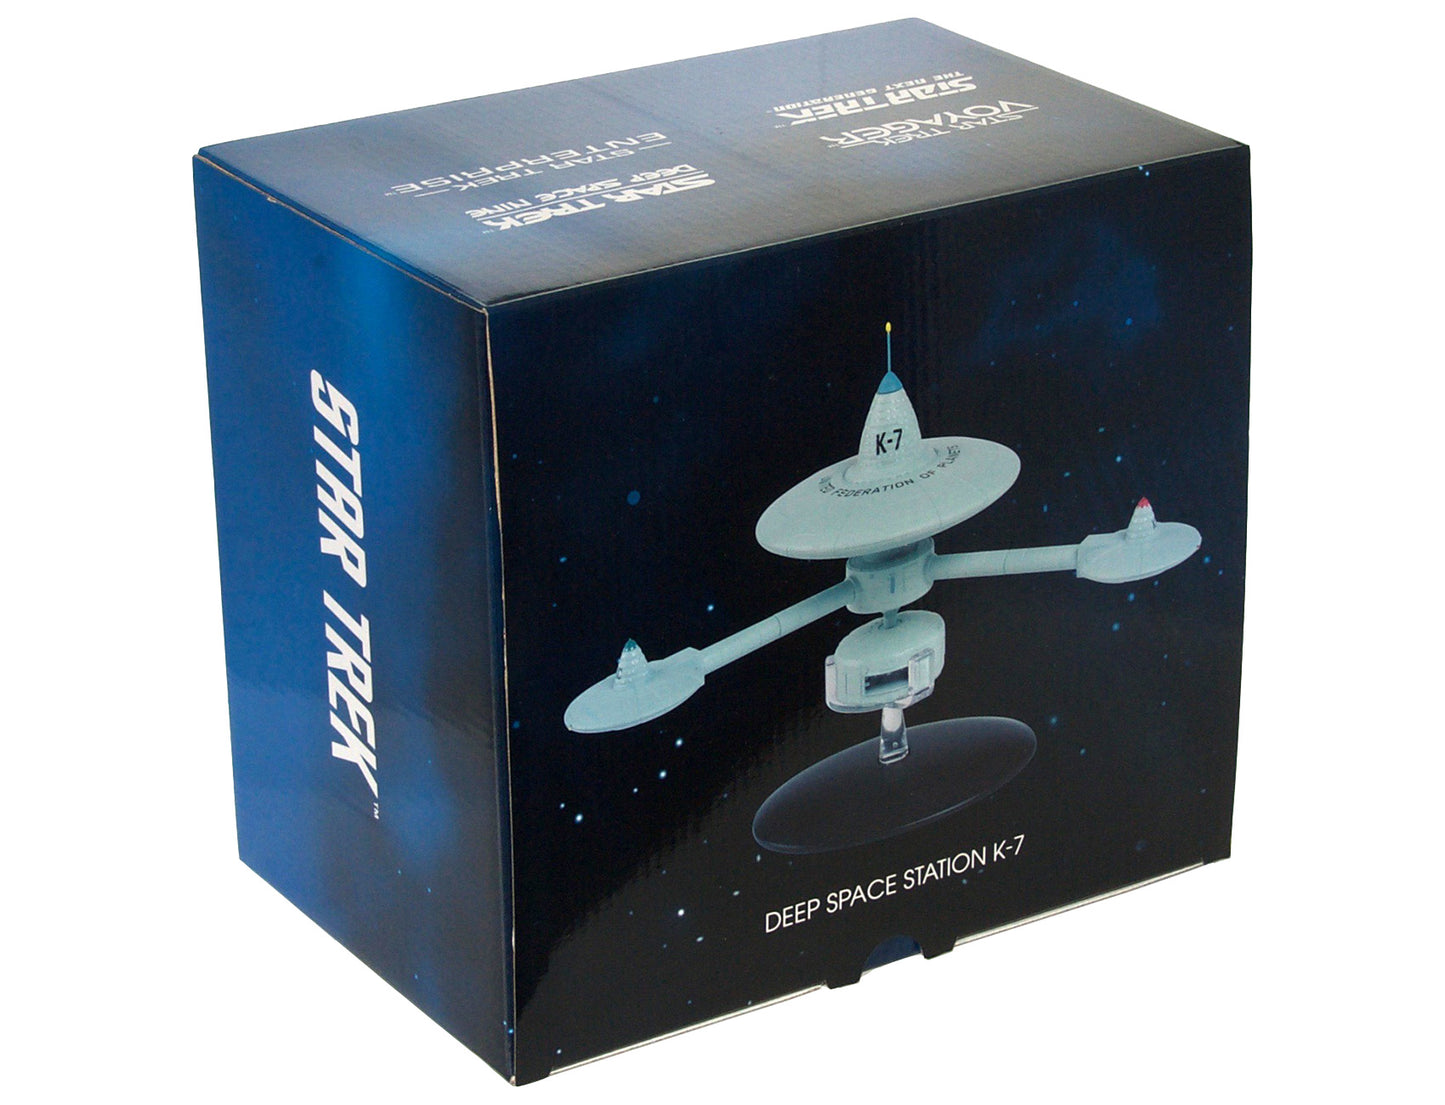 #10 Space Station K7 Model Die Cast Ship SPECIAL ISSUE (Eaglemoss / Star Trek)